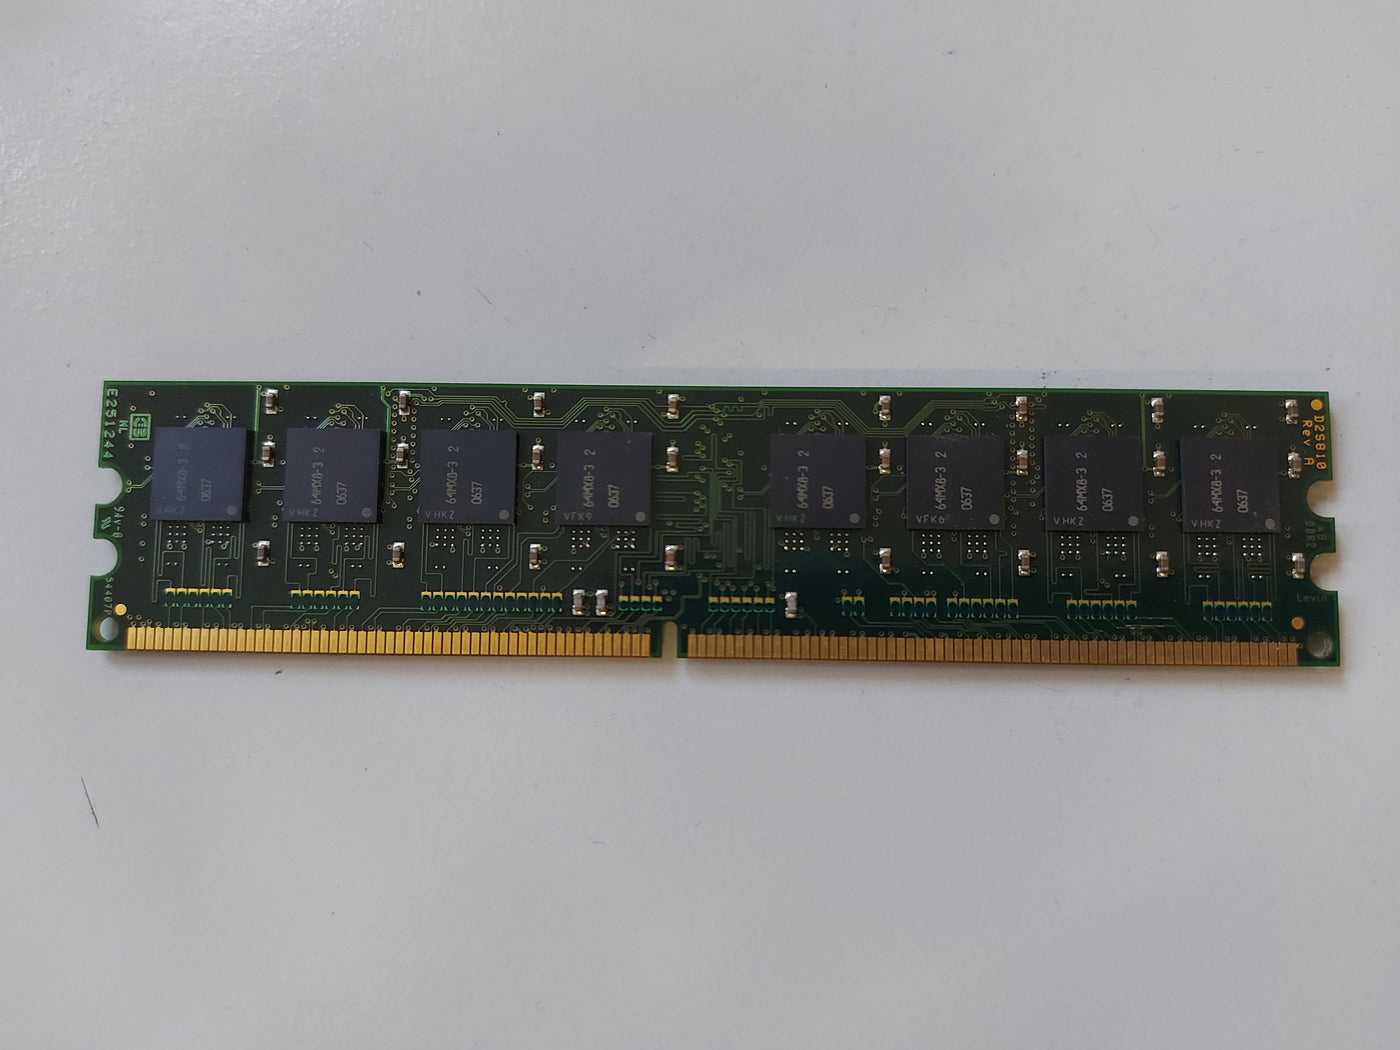 Rendition 1GB PC2-5300 DDR2 240-Pin NonECC Unbuffered CL5 SDRAM DIMM Module ( RM12864AA667.16FD ) REF